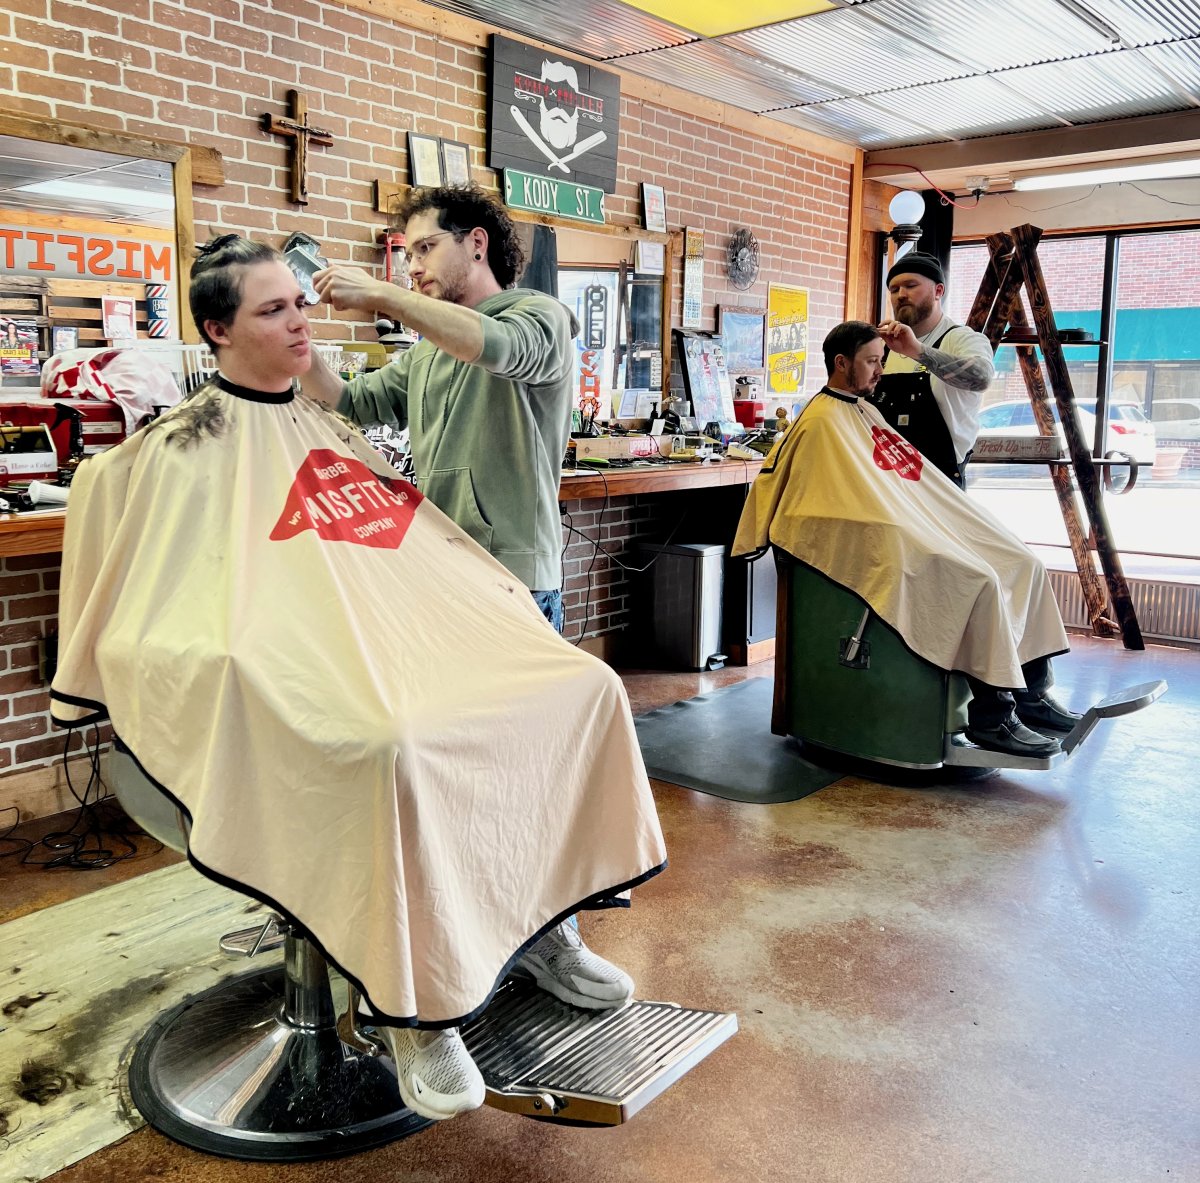 Barbershop, Indoors, Shoe, Person. Text: KODY ST. BARBER MISFITS COMPANY